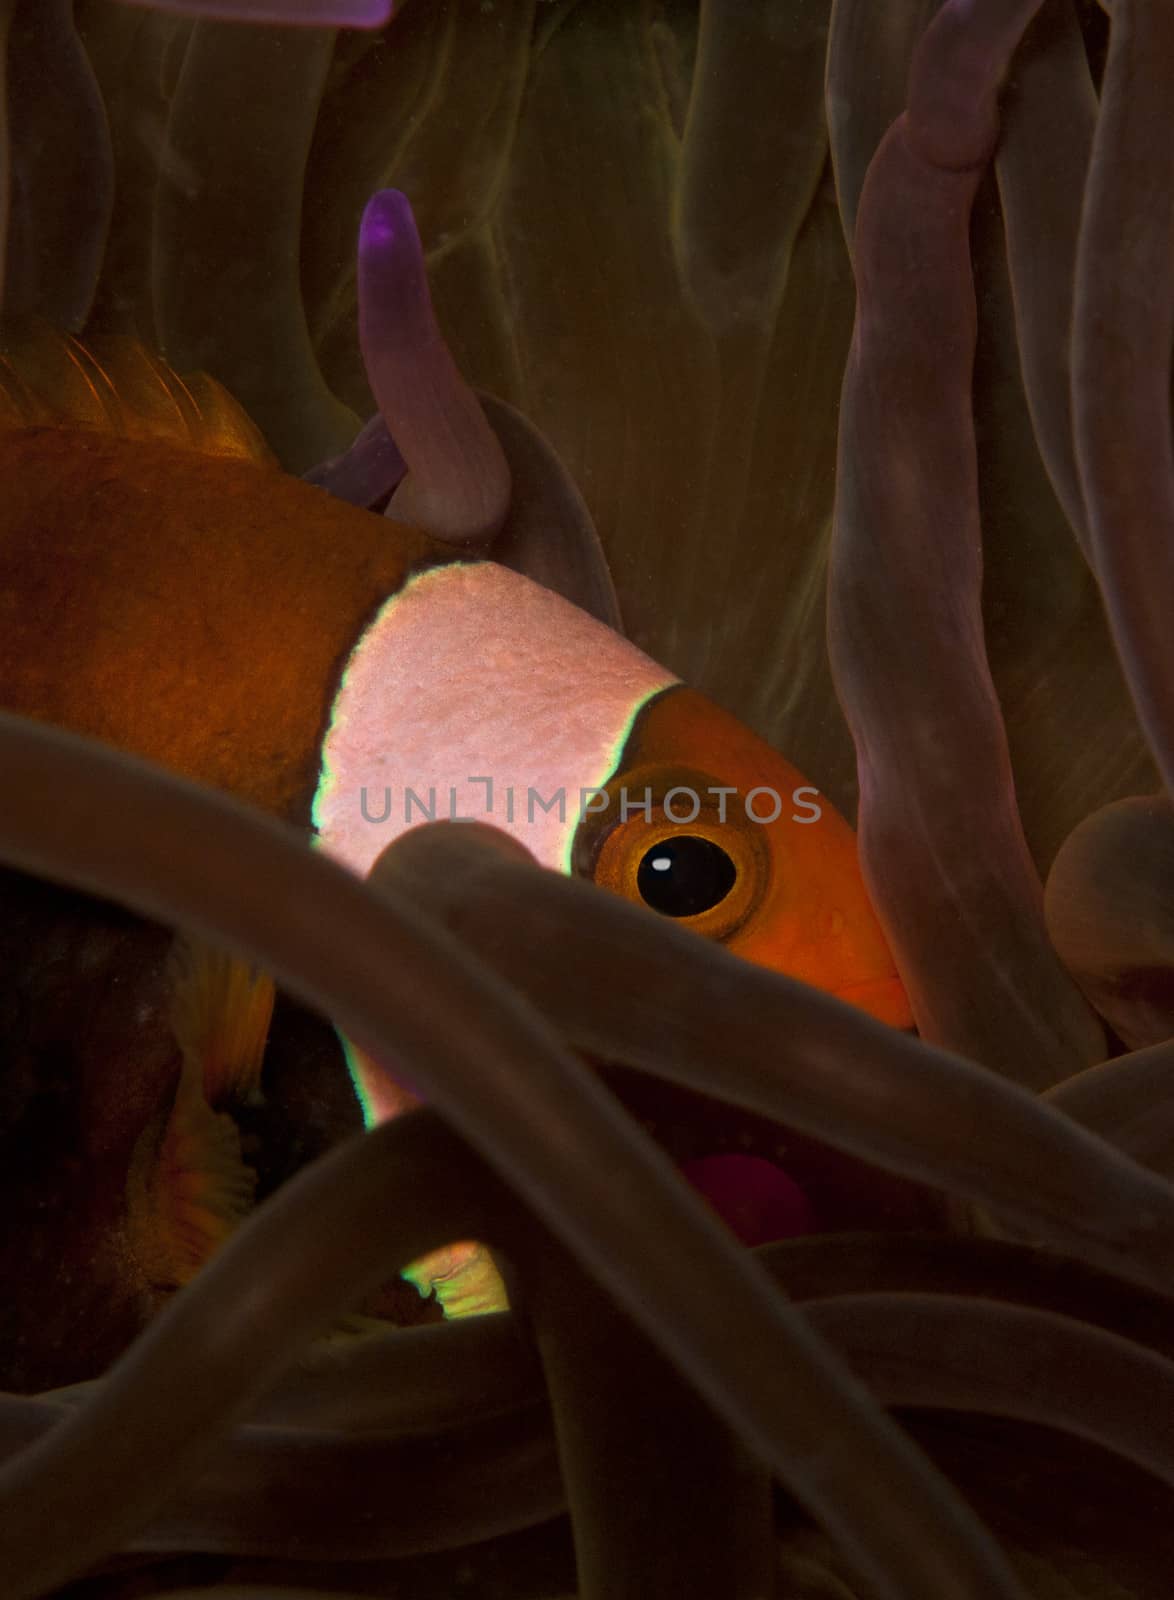 saddleback anemone fish hides behind the anemone